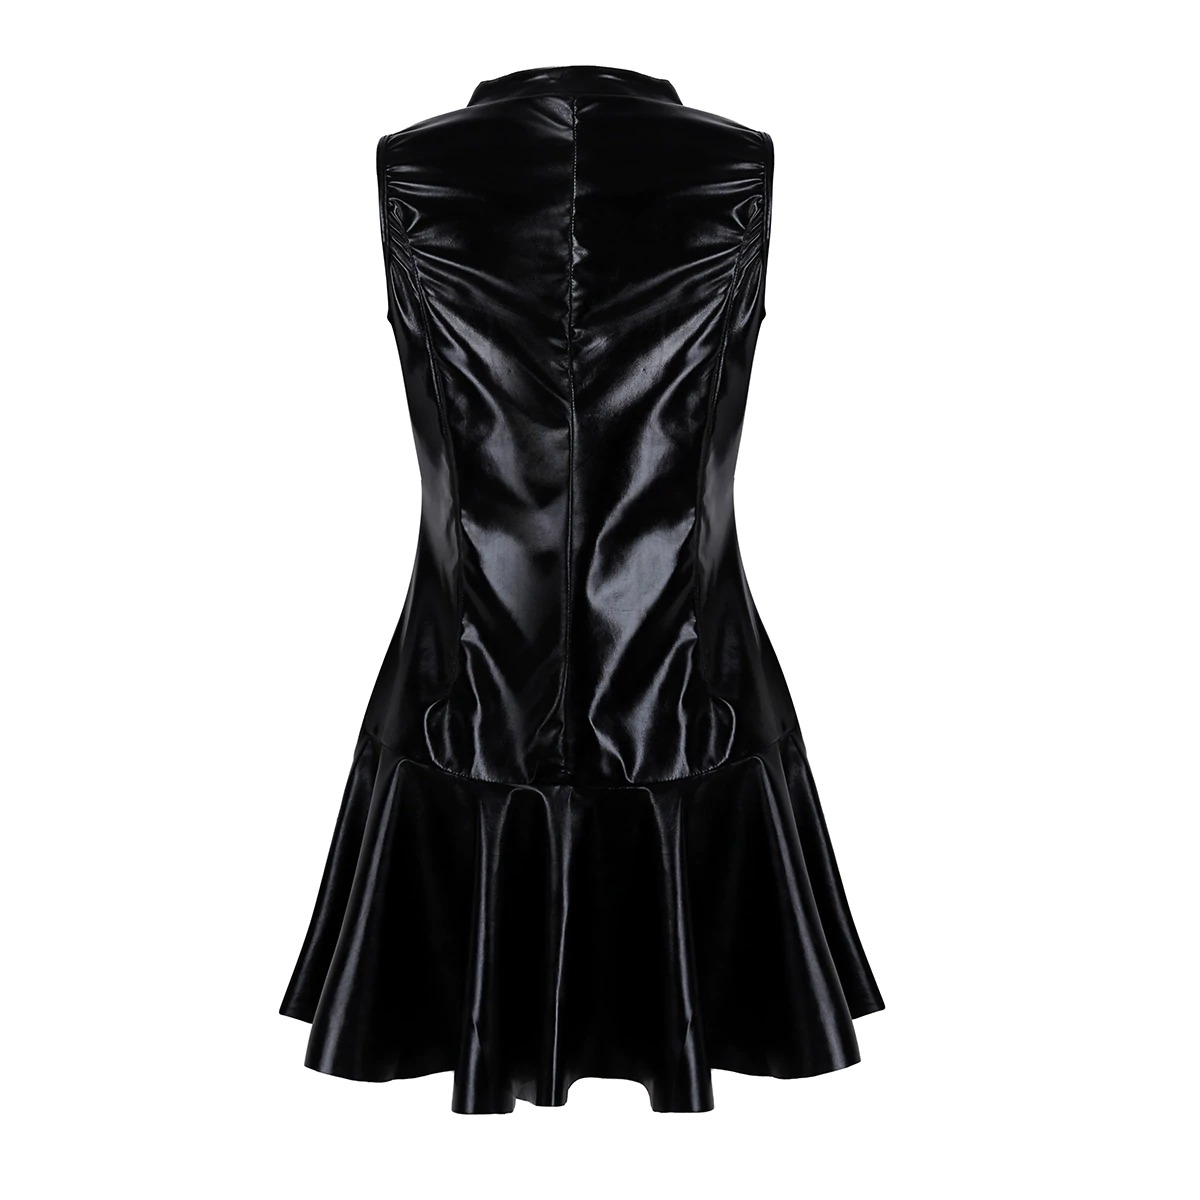 Women Cocktail Dress in Black / Wetlook Babydoll PU Leather High Collar Bottom Dress - EVE's SECRETS